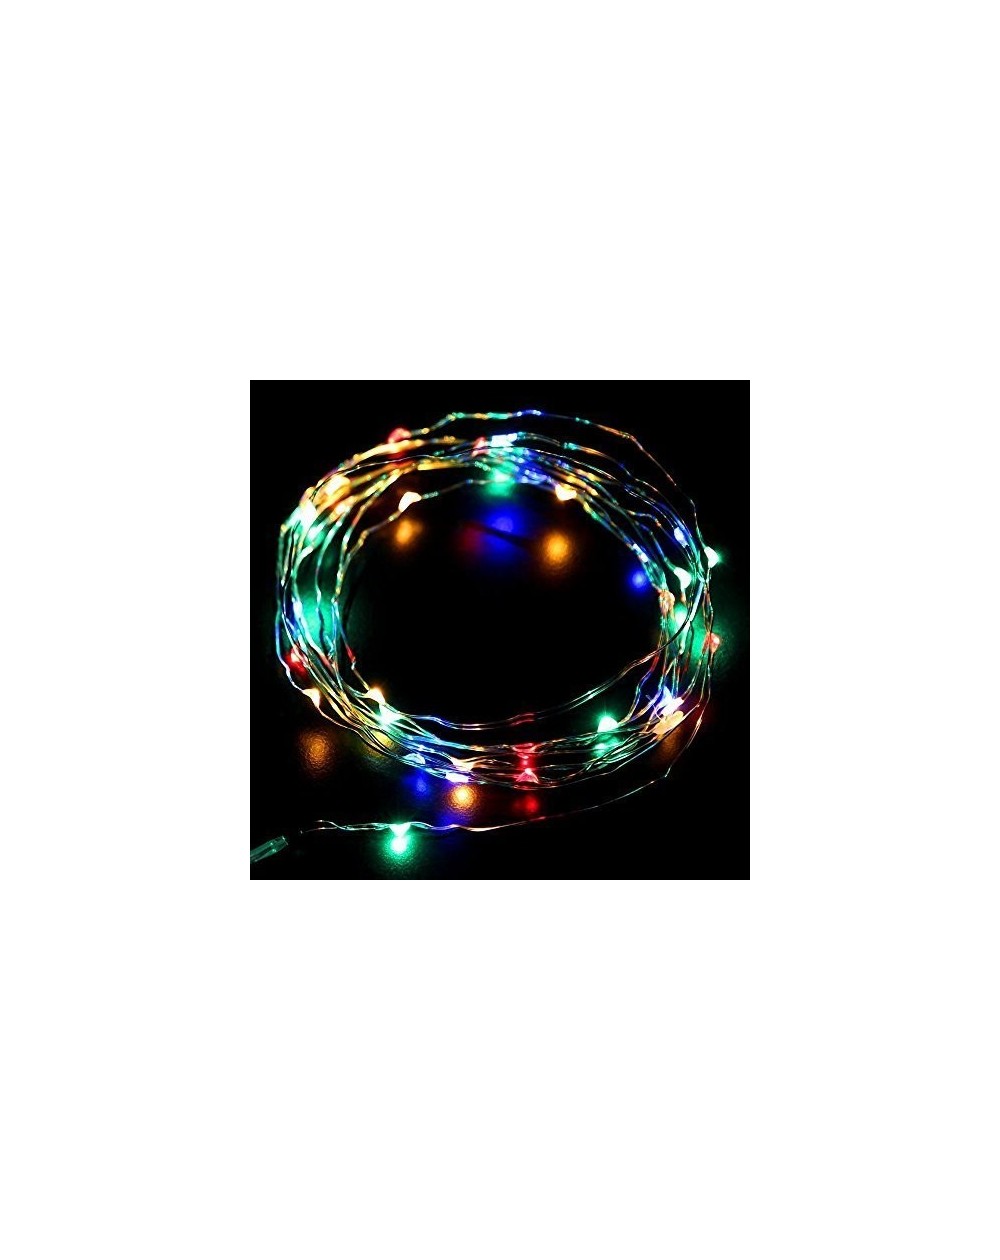 Indoor String Lights 10ft (3m) 30LEDs RGBY Fairy LED Wire String Lights - Multicolor Starry Starry Lights w/ Timer Battery Bo...